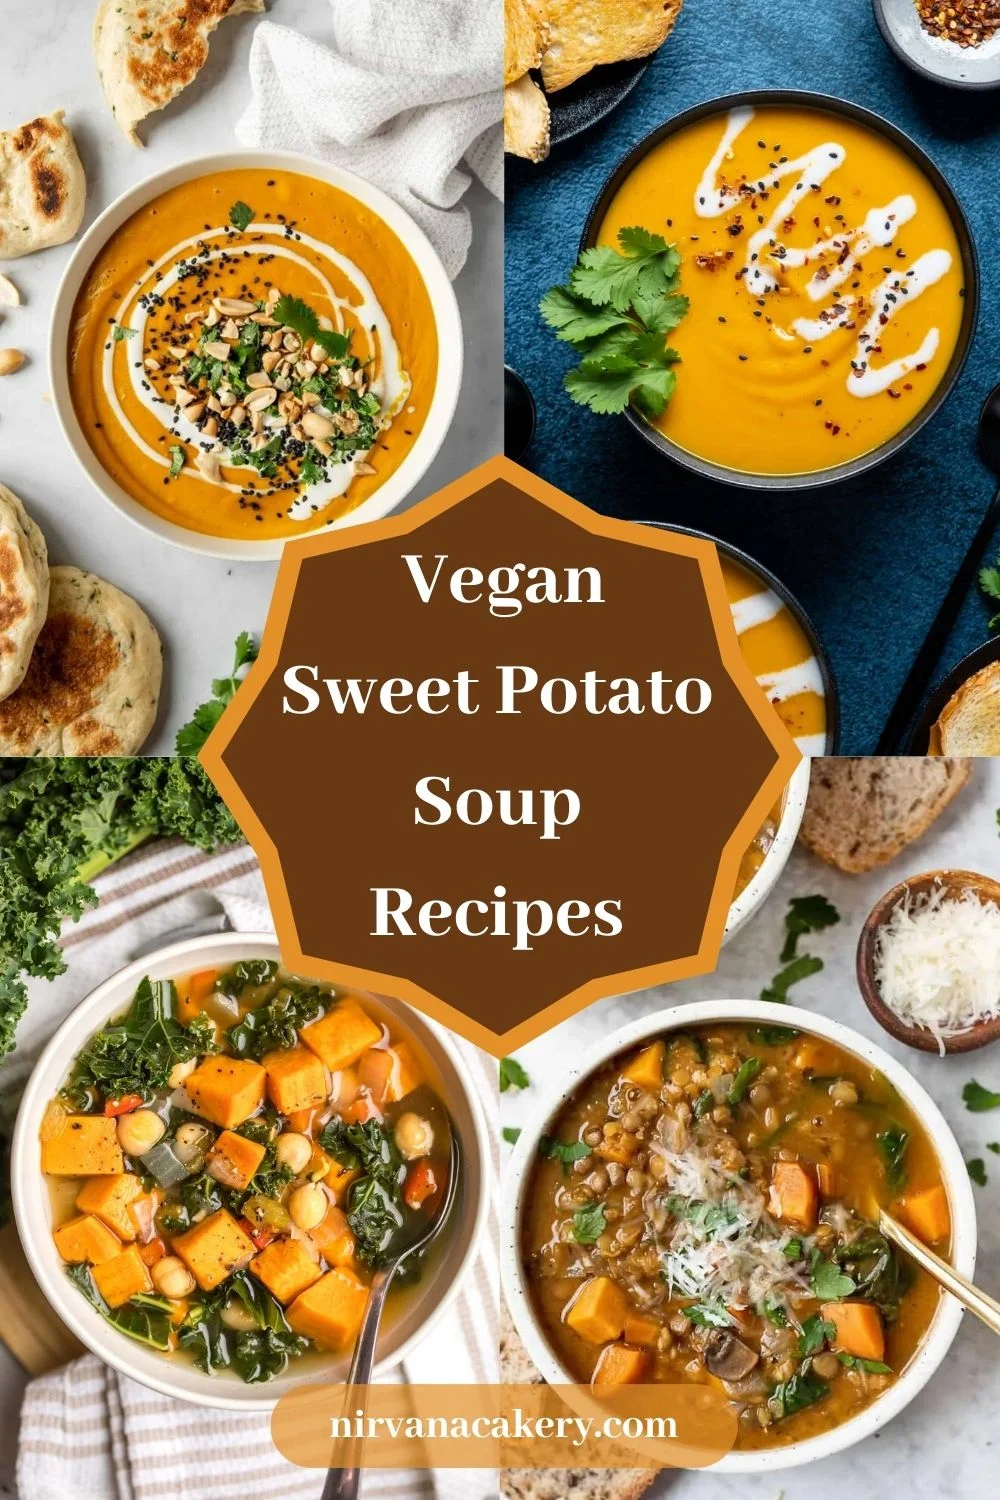 https://nirvanacakery.com/wp-content/uploads/2023/01/Vegan-Sweet-Potato-Soup-Recipes.jpg.webp